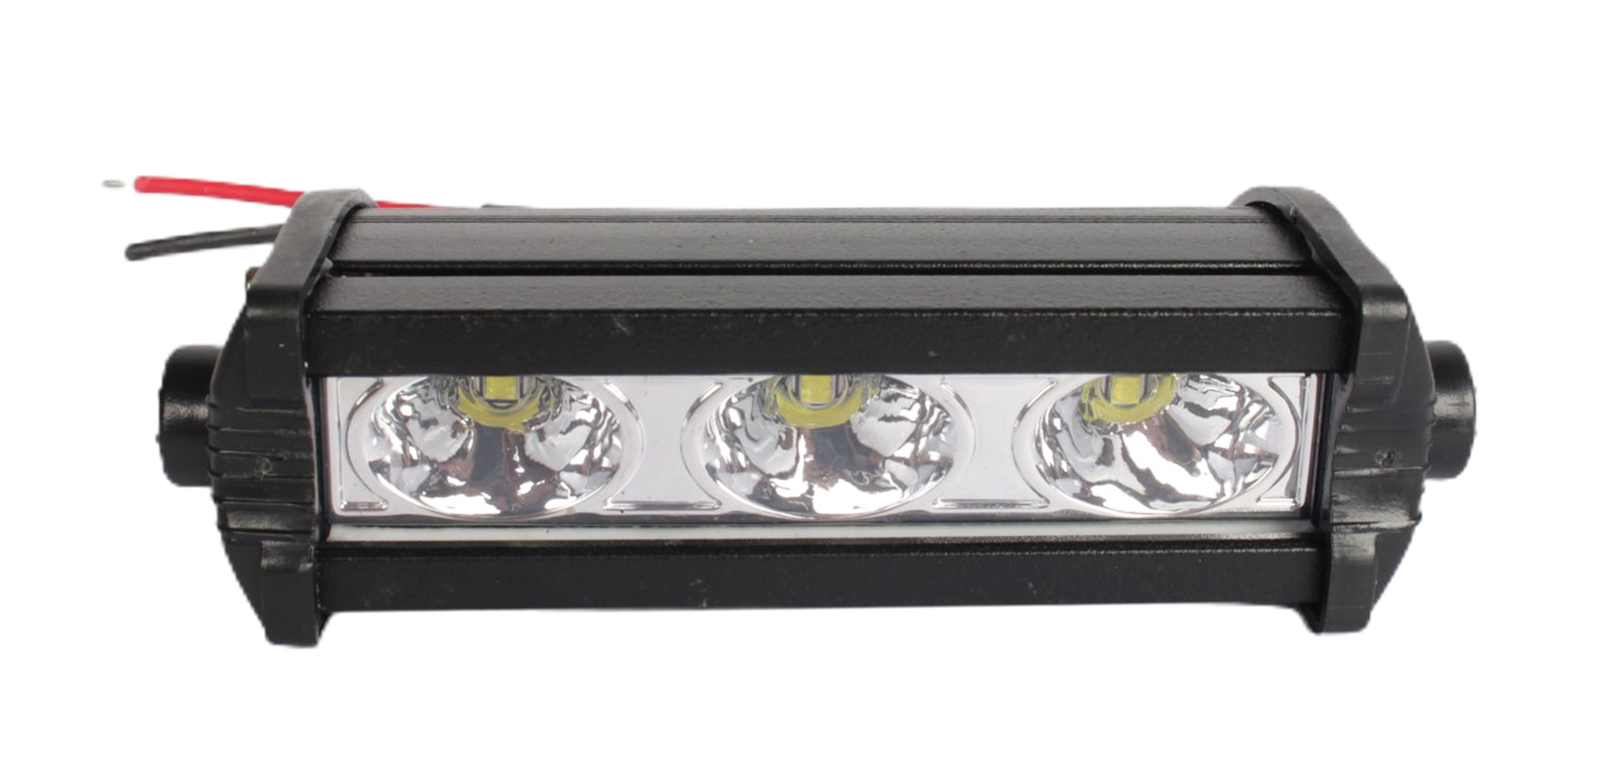 Фара рабочего света MISTAR MIS- E9W 3 LED 10-30V 90х25 мм диодная 1шт.